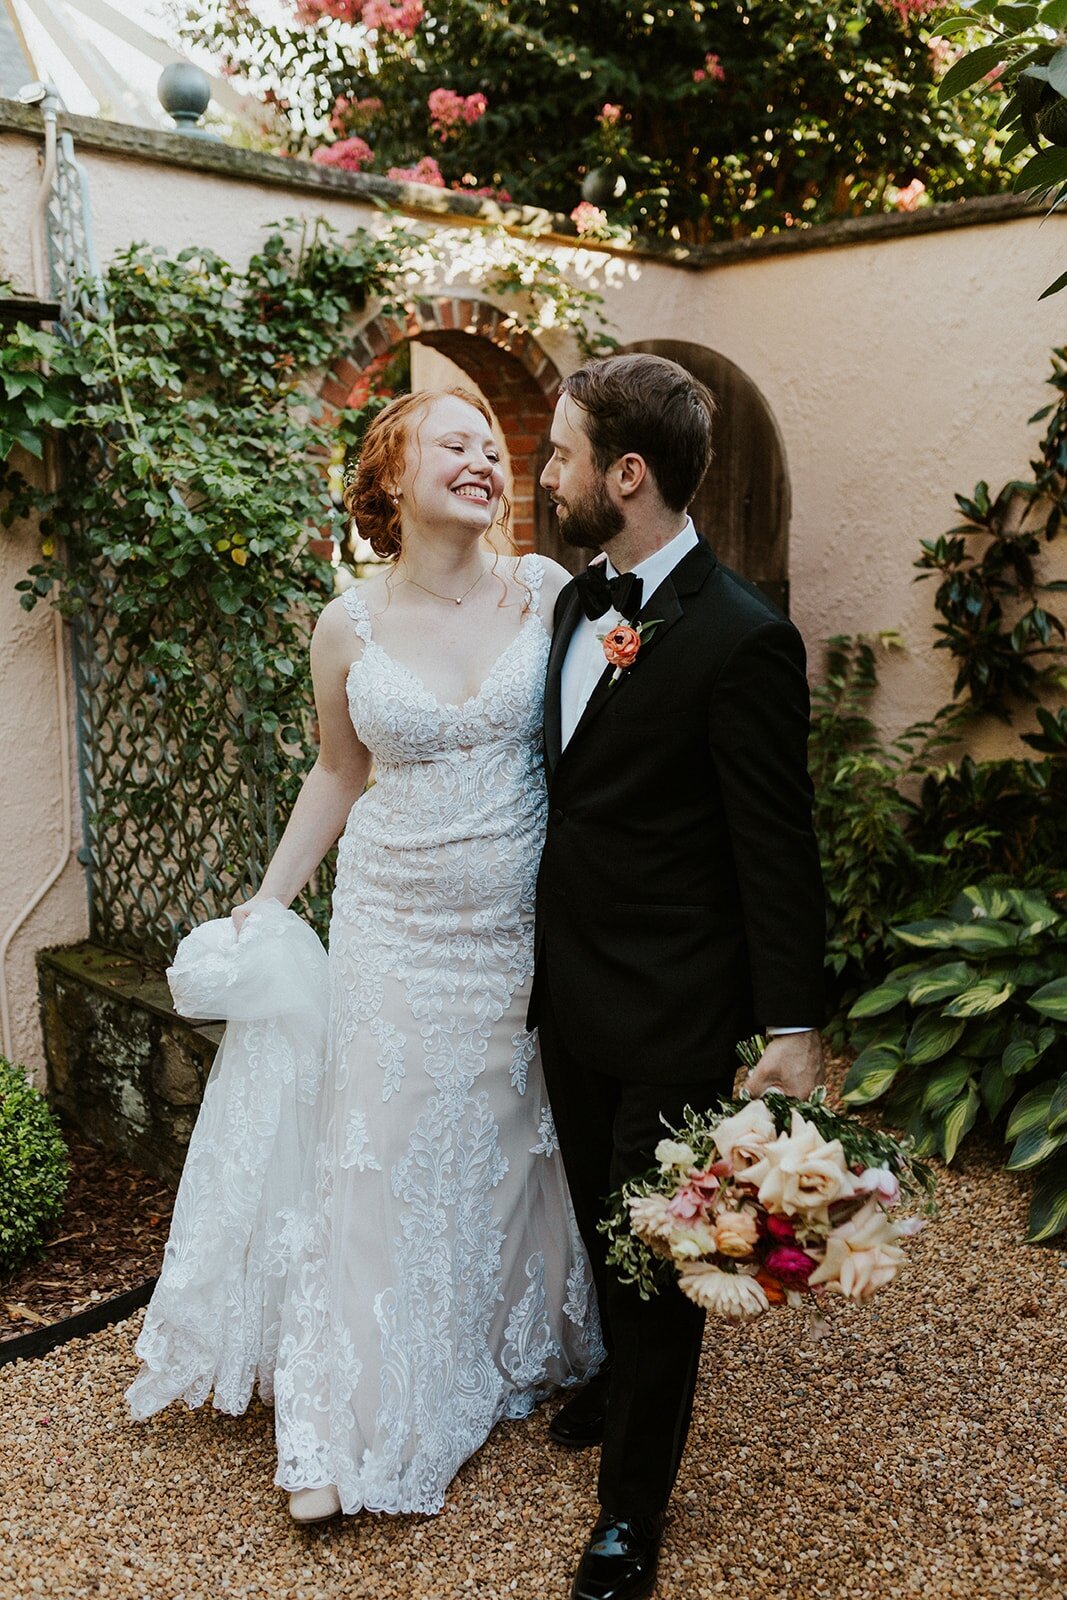 A bride and a groom walk in a garden